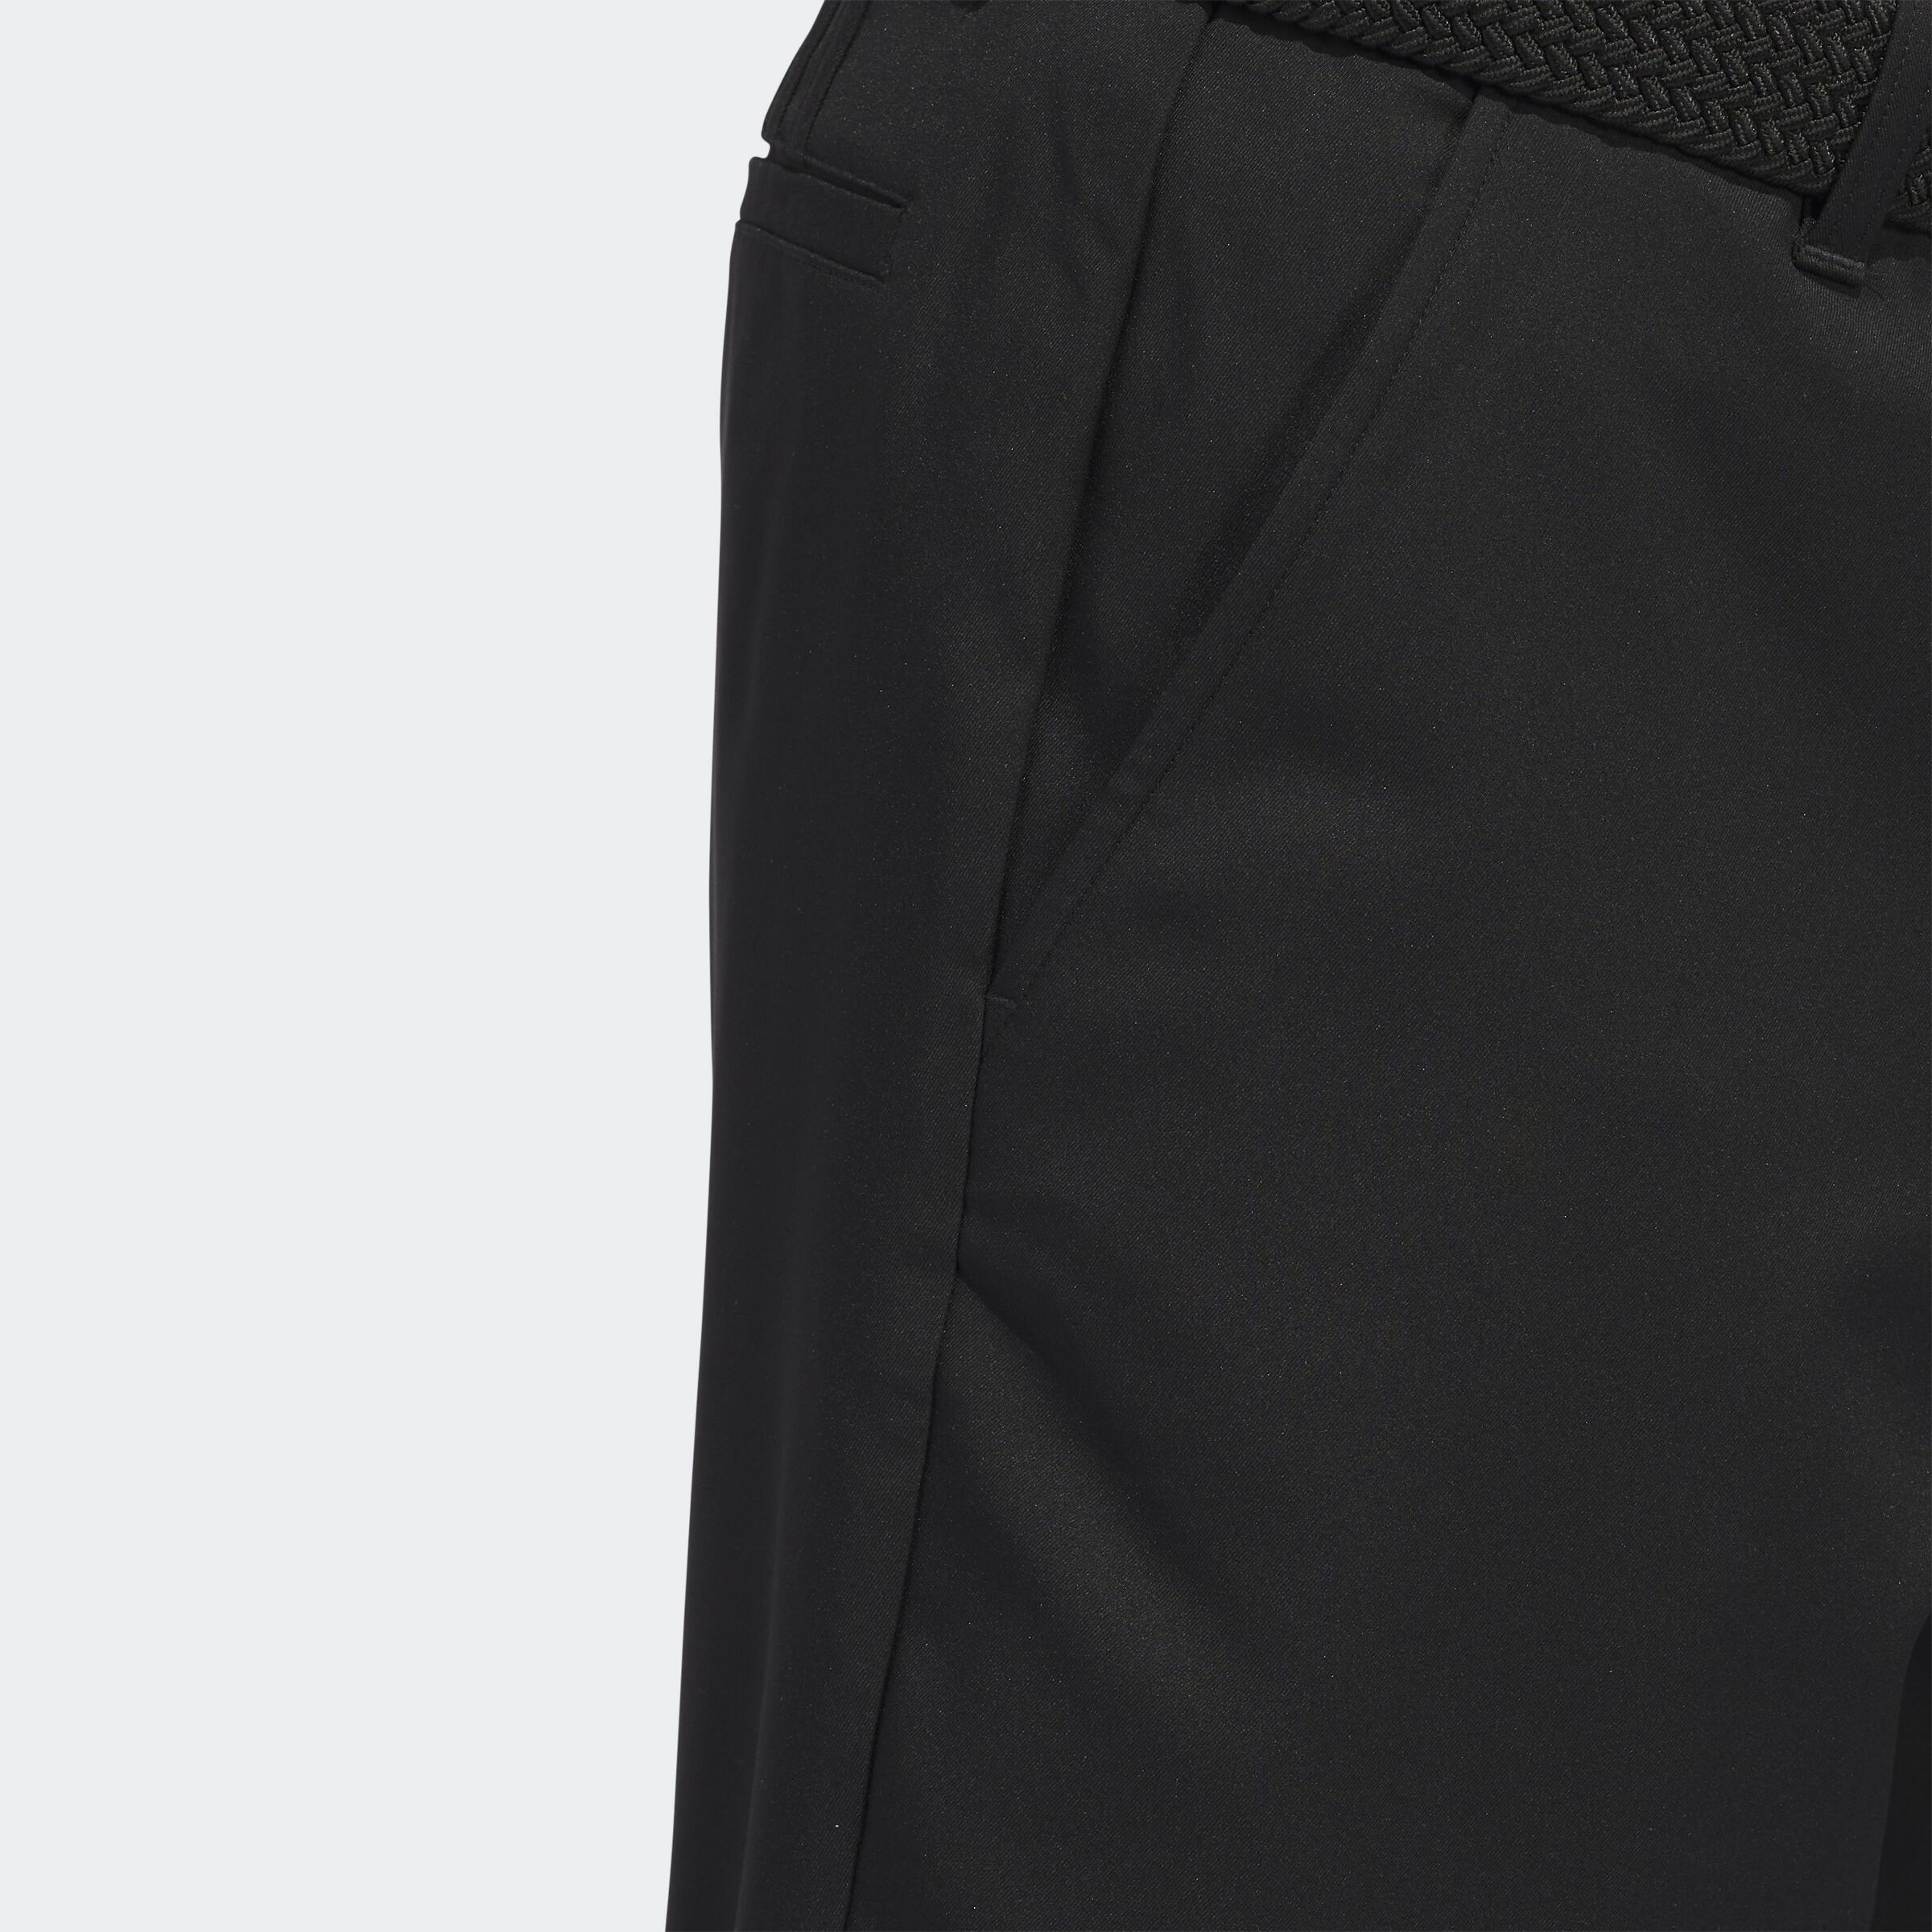 Men's Bermuda Shorts - Adidas - Black 4/5